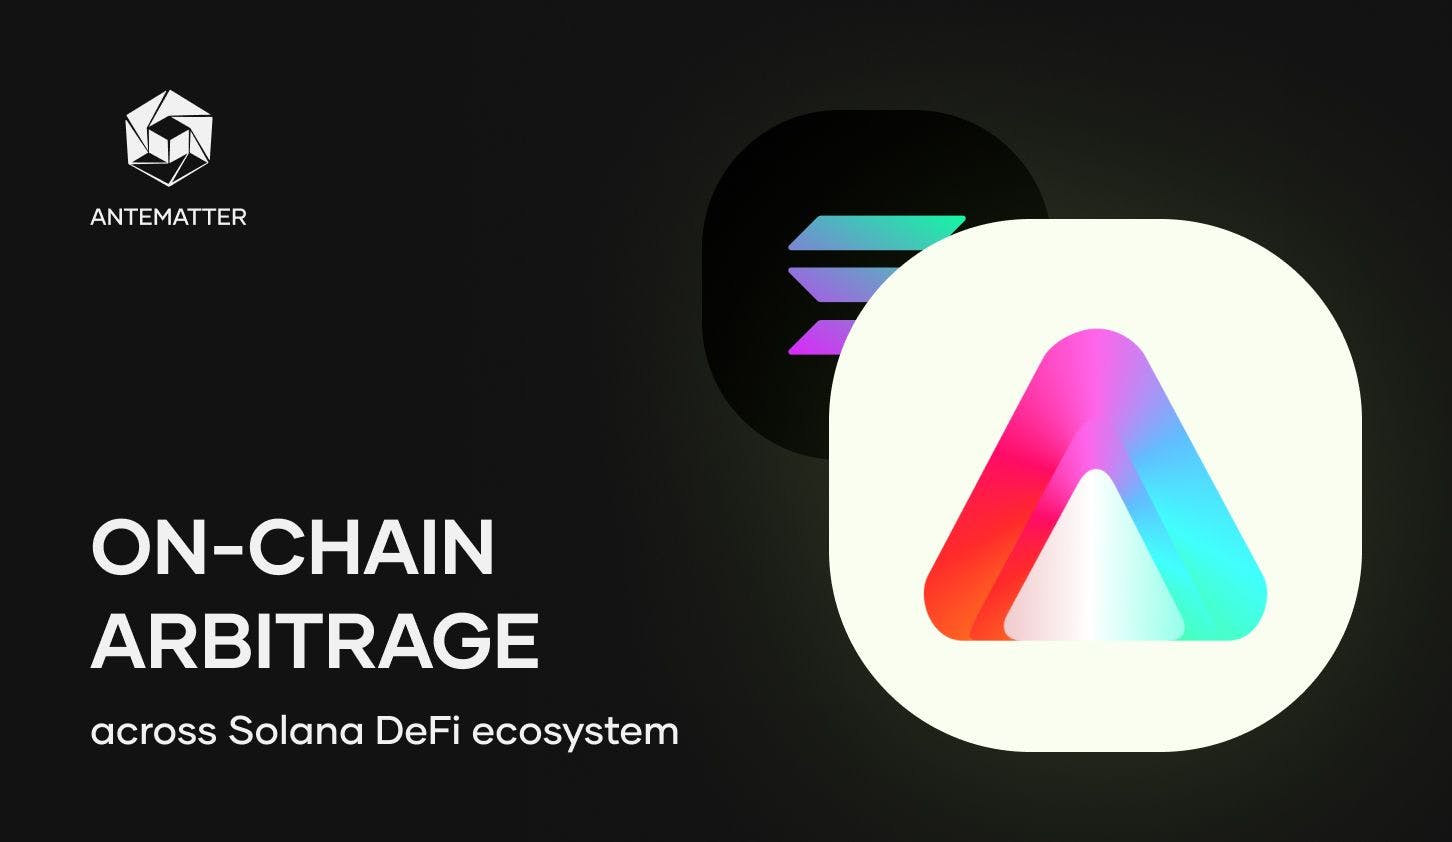 On-Chain Arbitrage across Solana DeFi ecosystem